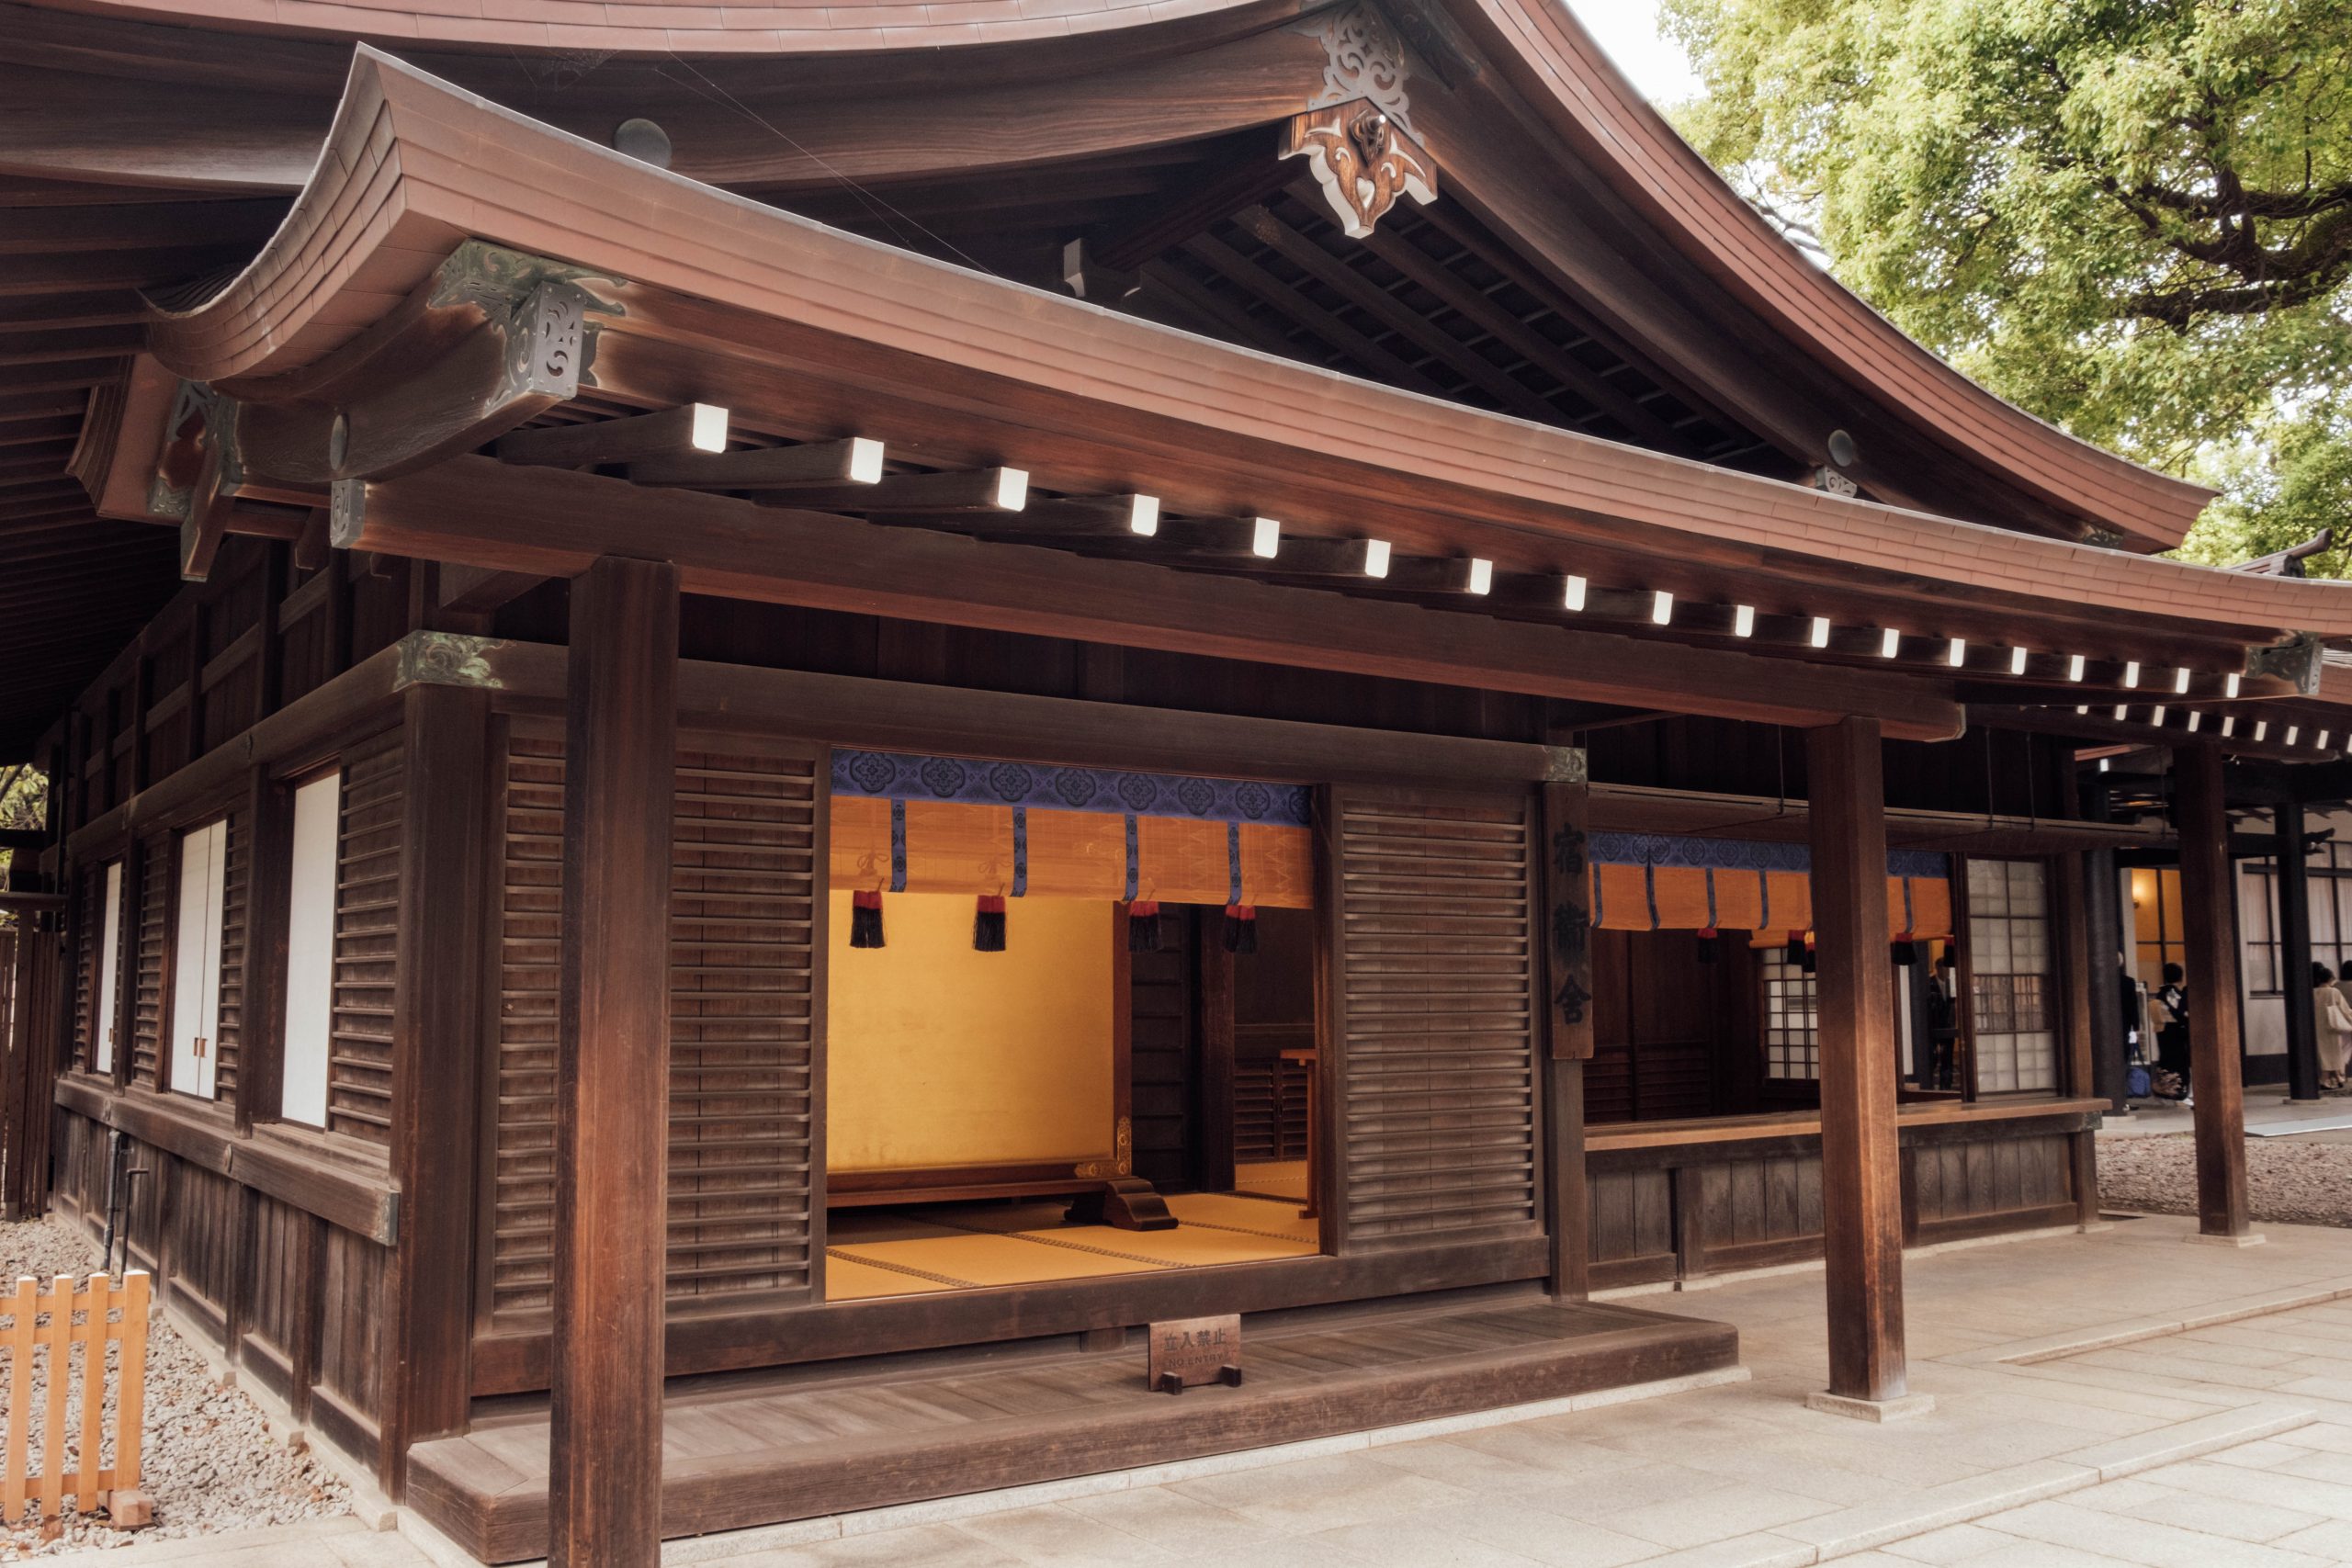 Beautiful wooden building with tatami floors at Meiji Jingu shrine